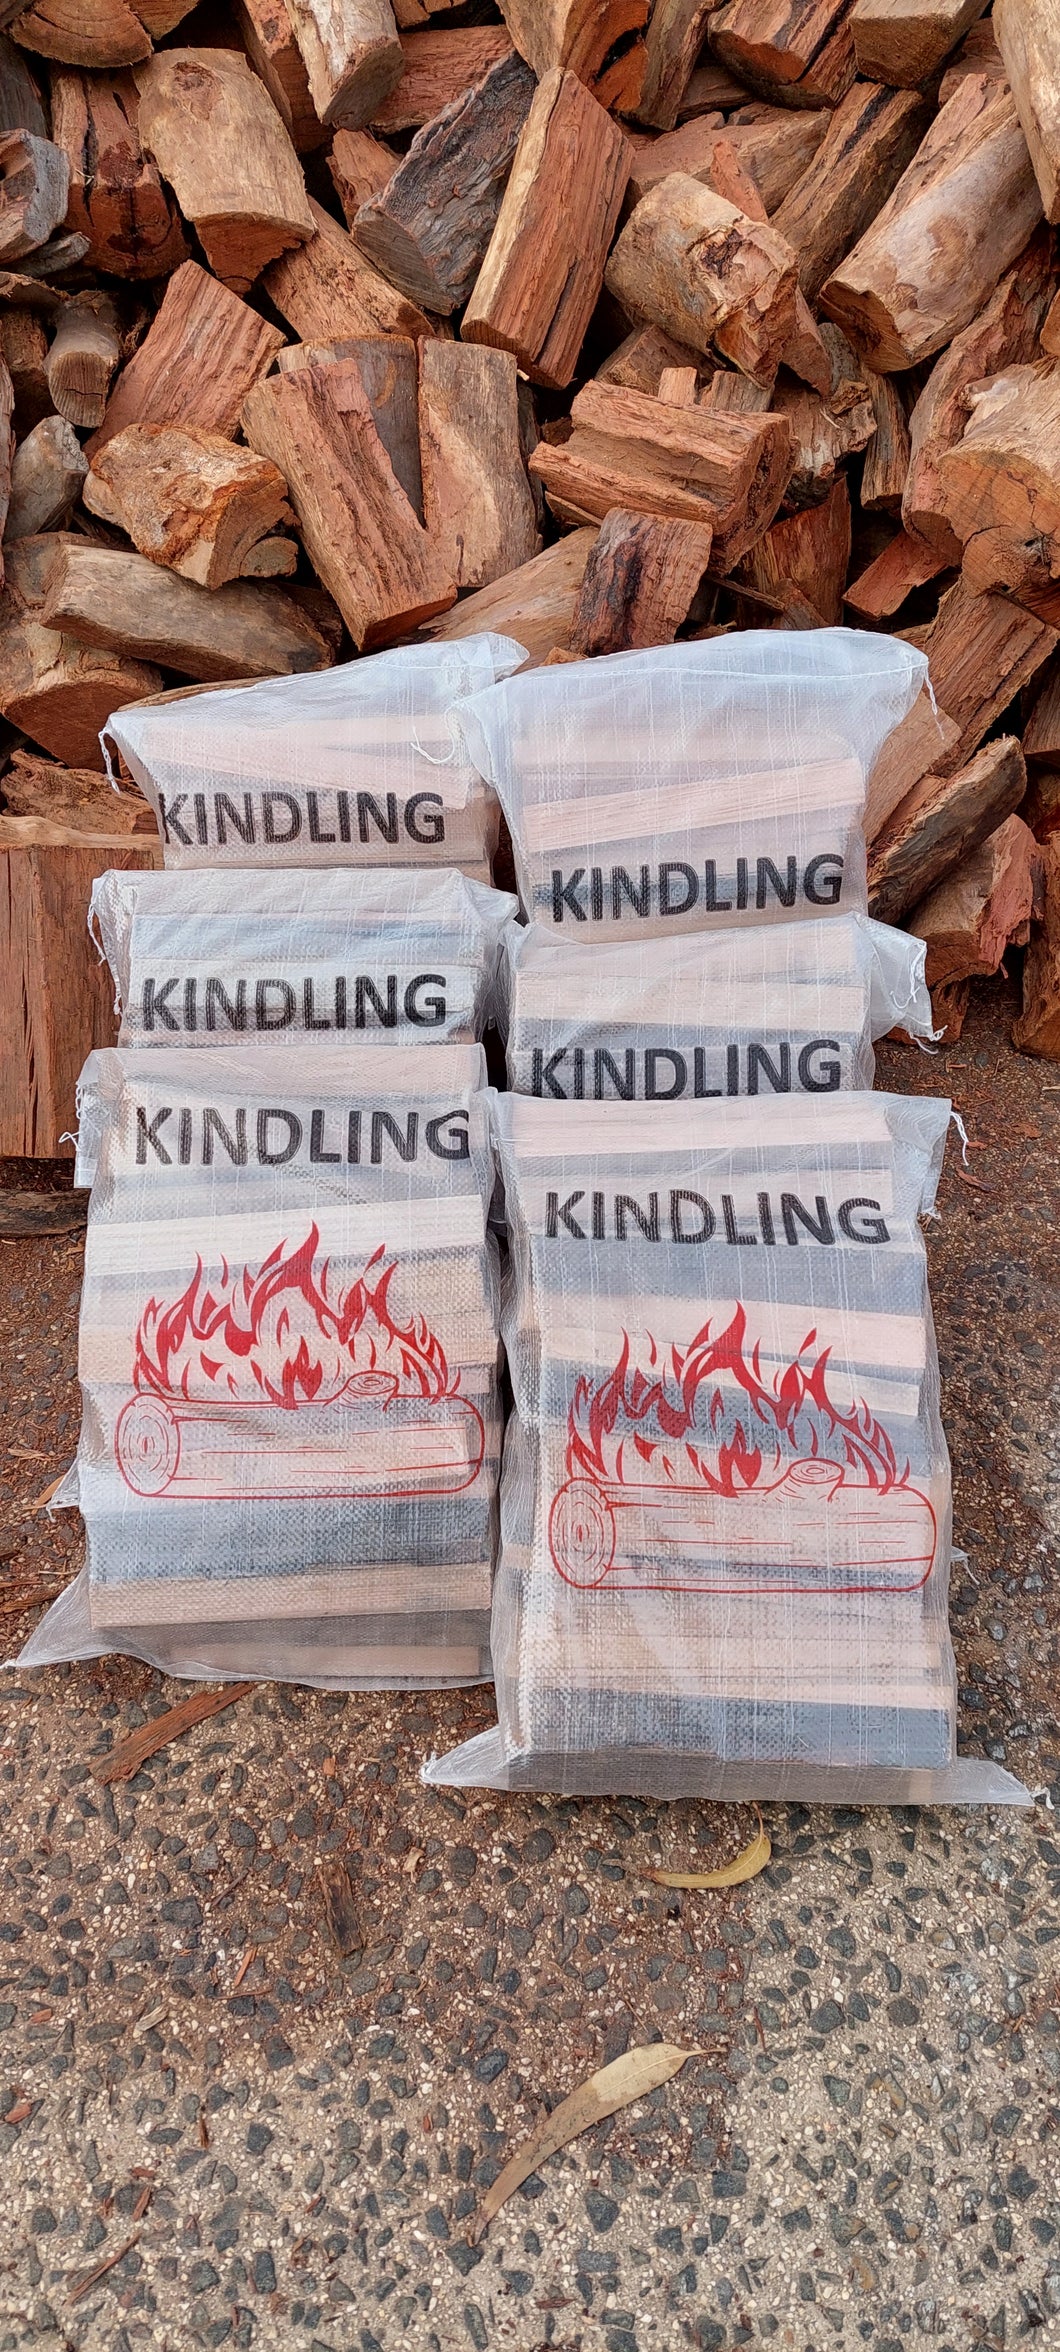 6 Bags of Kindling